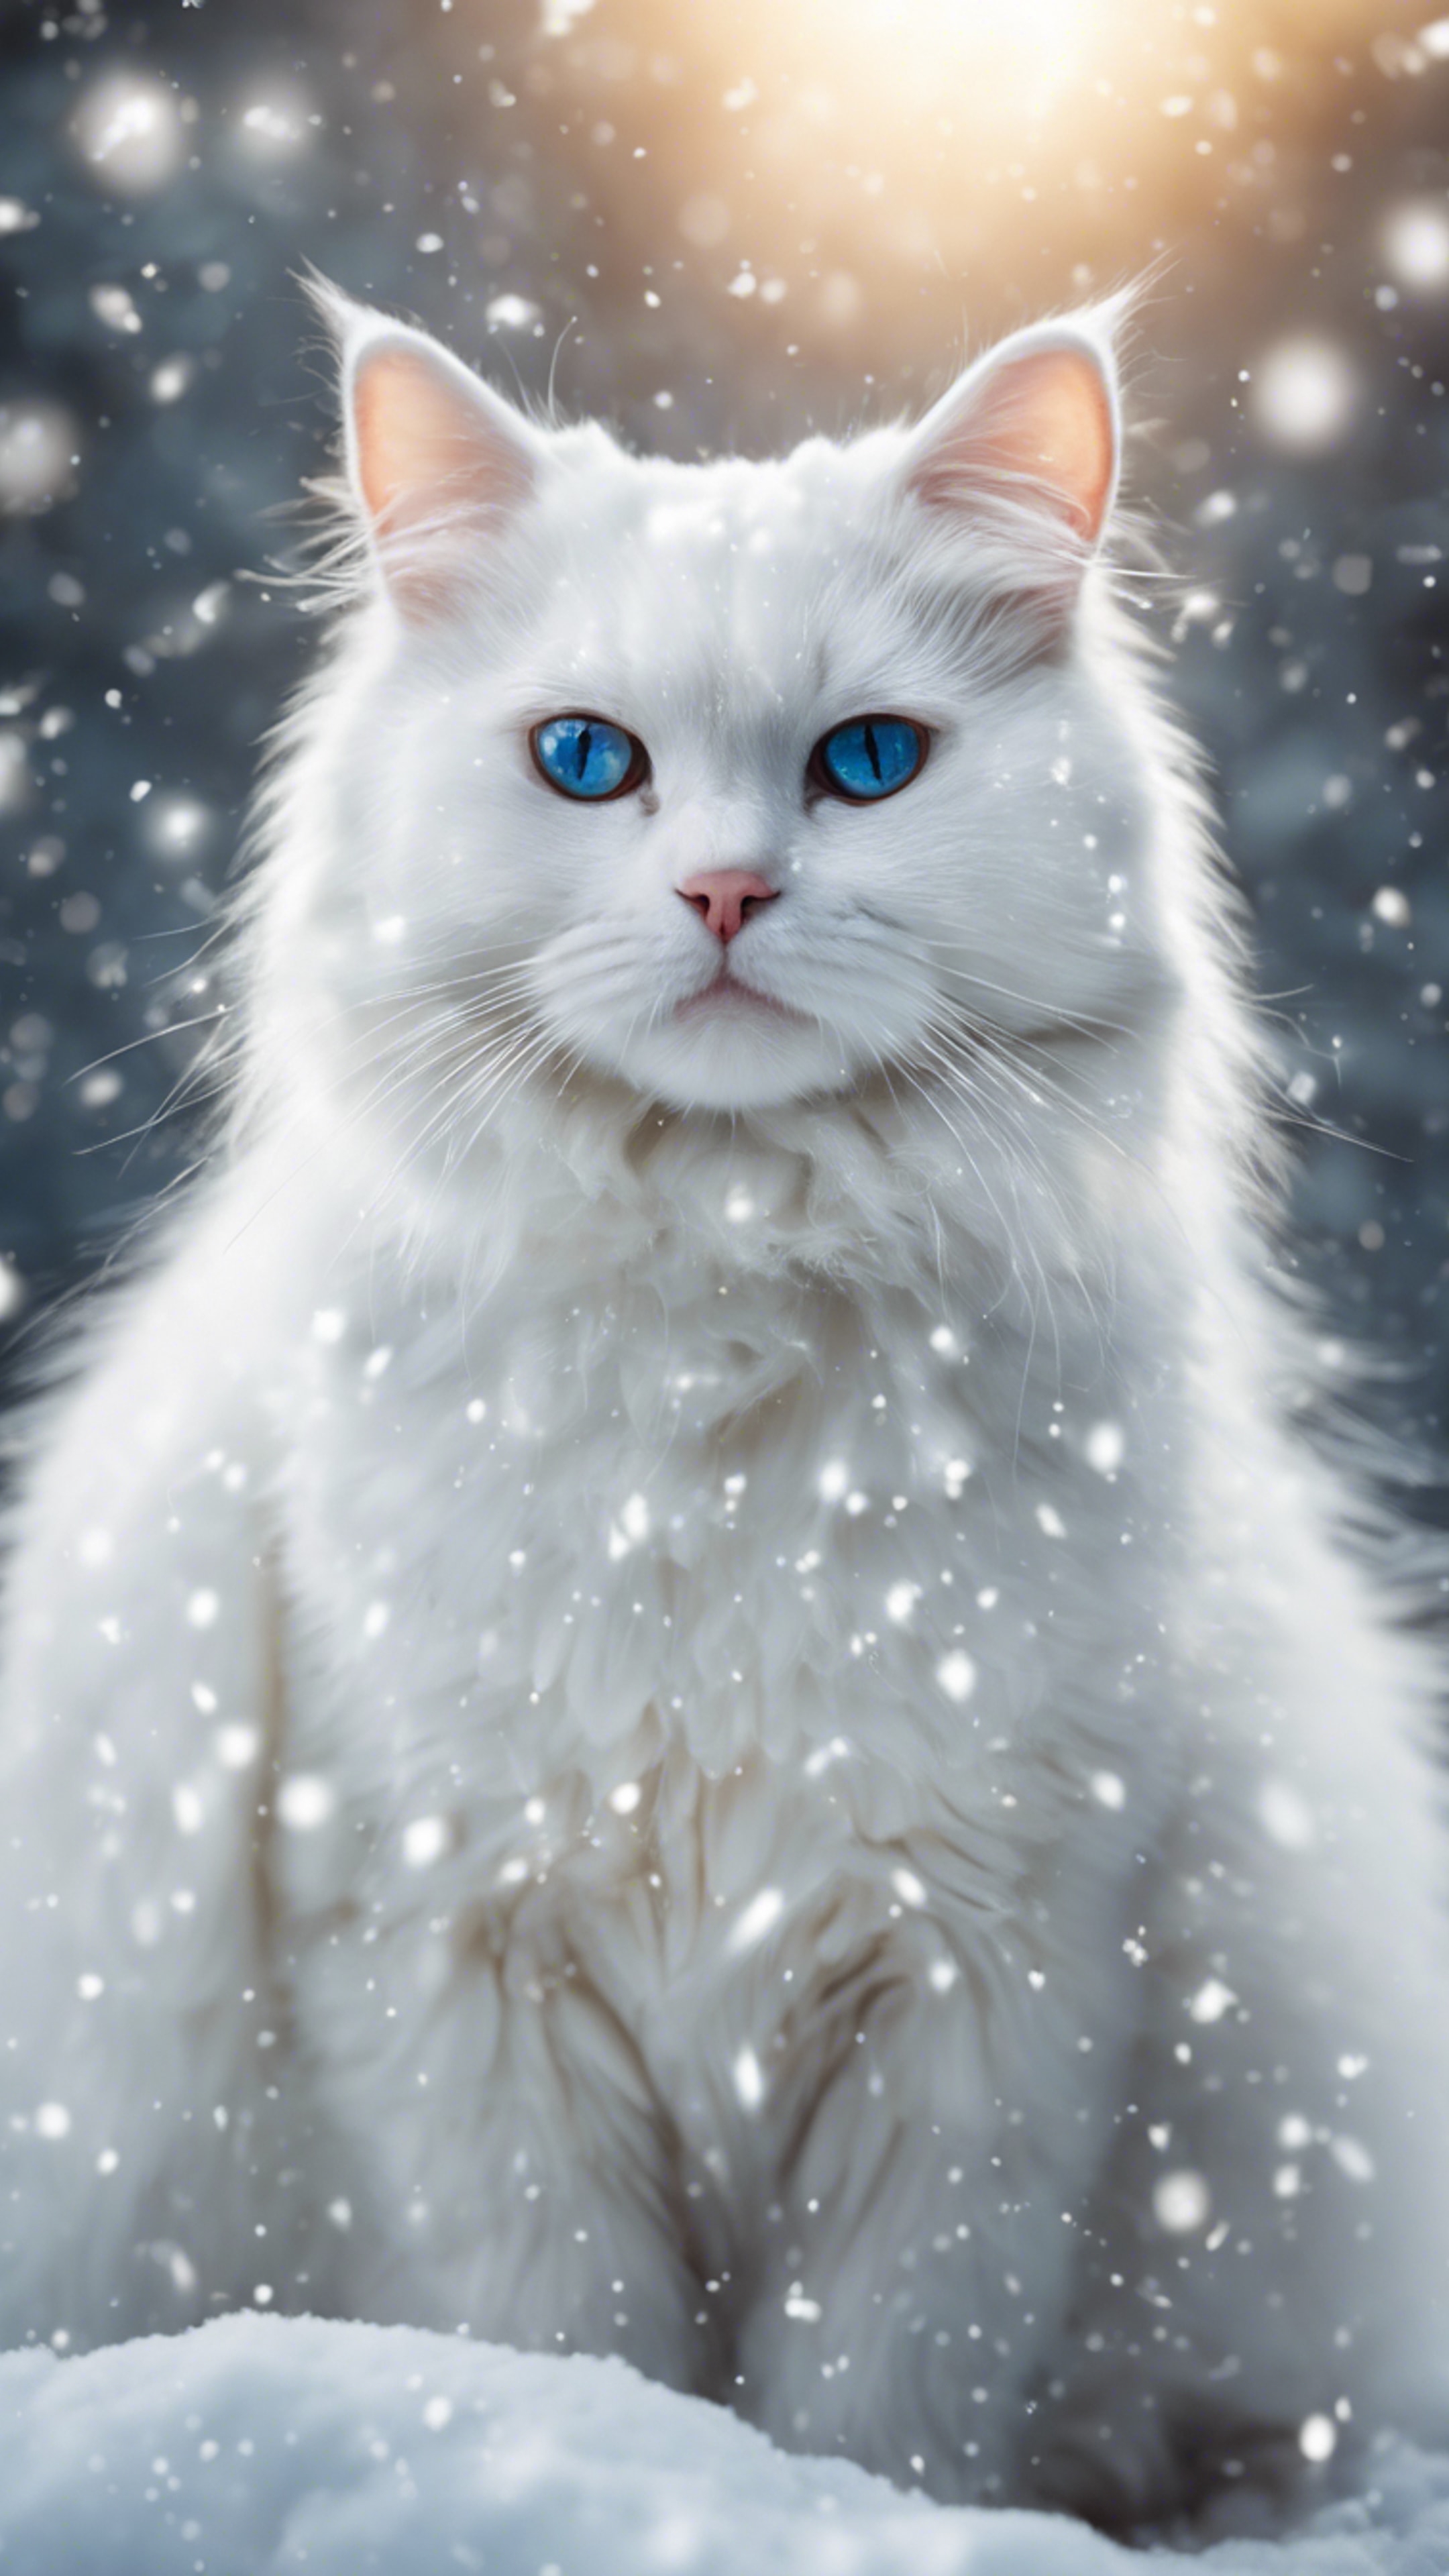 A fluffy white cat in the winter, amidst falling snowflakes. duvar kağıdı[a246cb8c0cd2485b96c3]